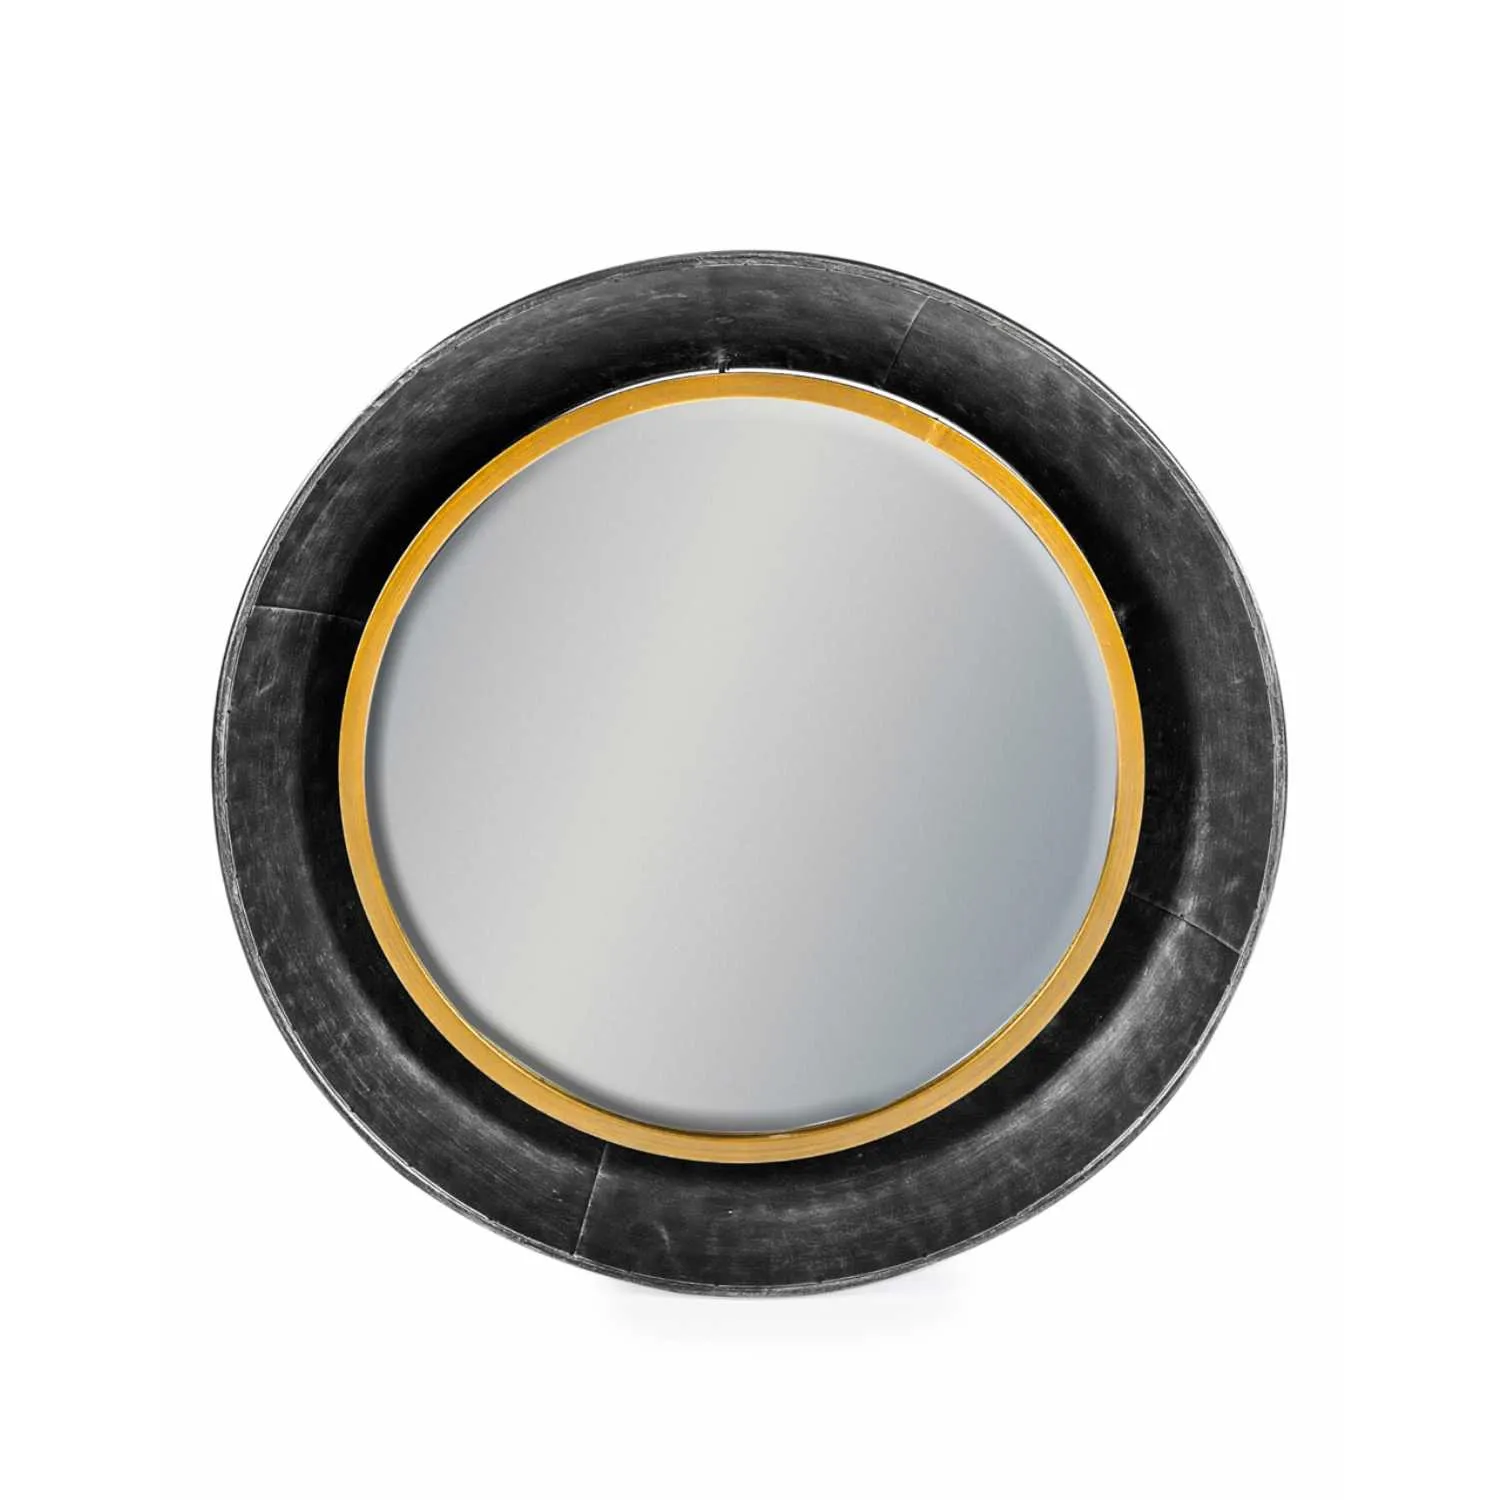 Black and Bronze Round Wall Mirror 60cm Diameter